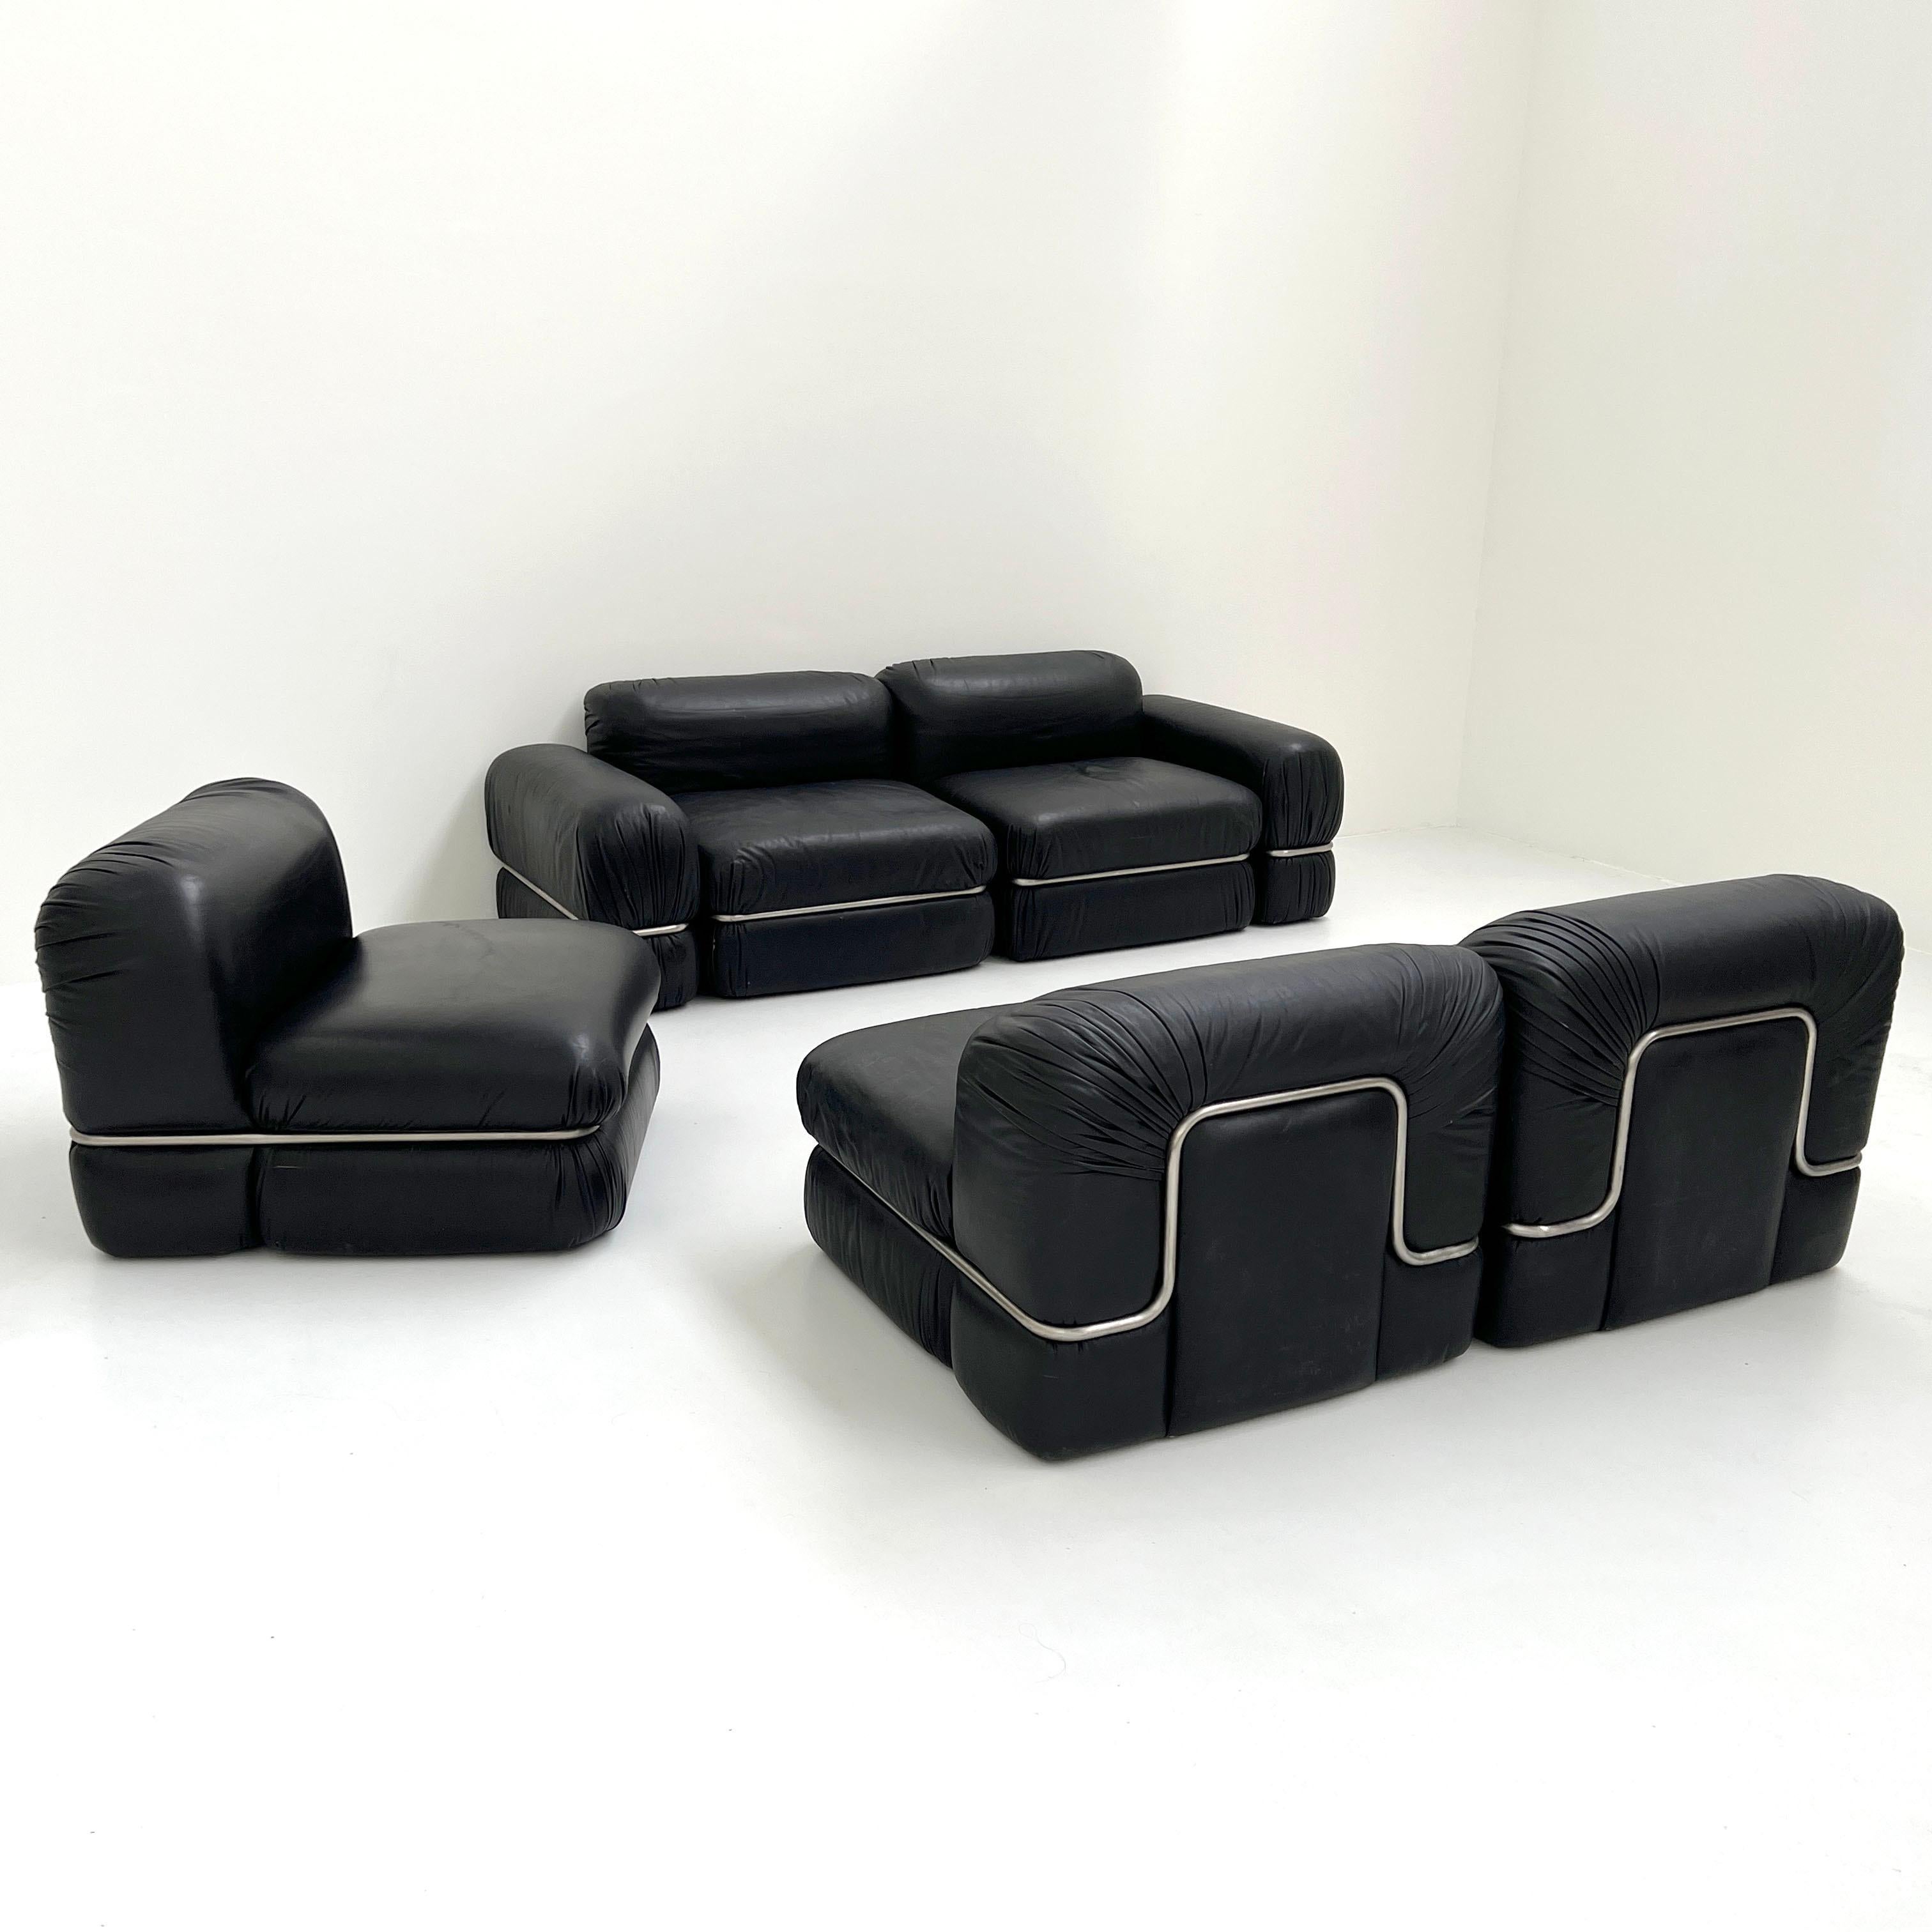 Black leather modular sofa by Rodolfo Bonetto for Tecnosalotto, 1960s
Designer - Rodolfo Bonetto
Producer - Tecnosalotto
Model - T/1 Modular Sofa
Design Period - Sixties 
Measurements - 1 Element = Width 71 cm x Depth 84 cm x Height 63 cm x